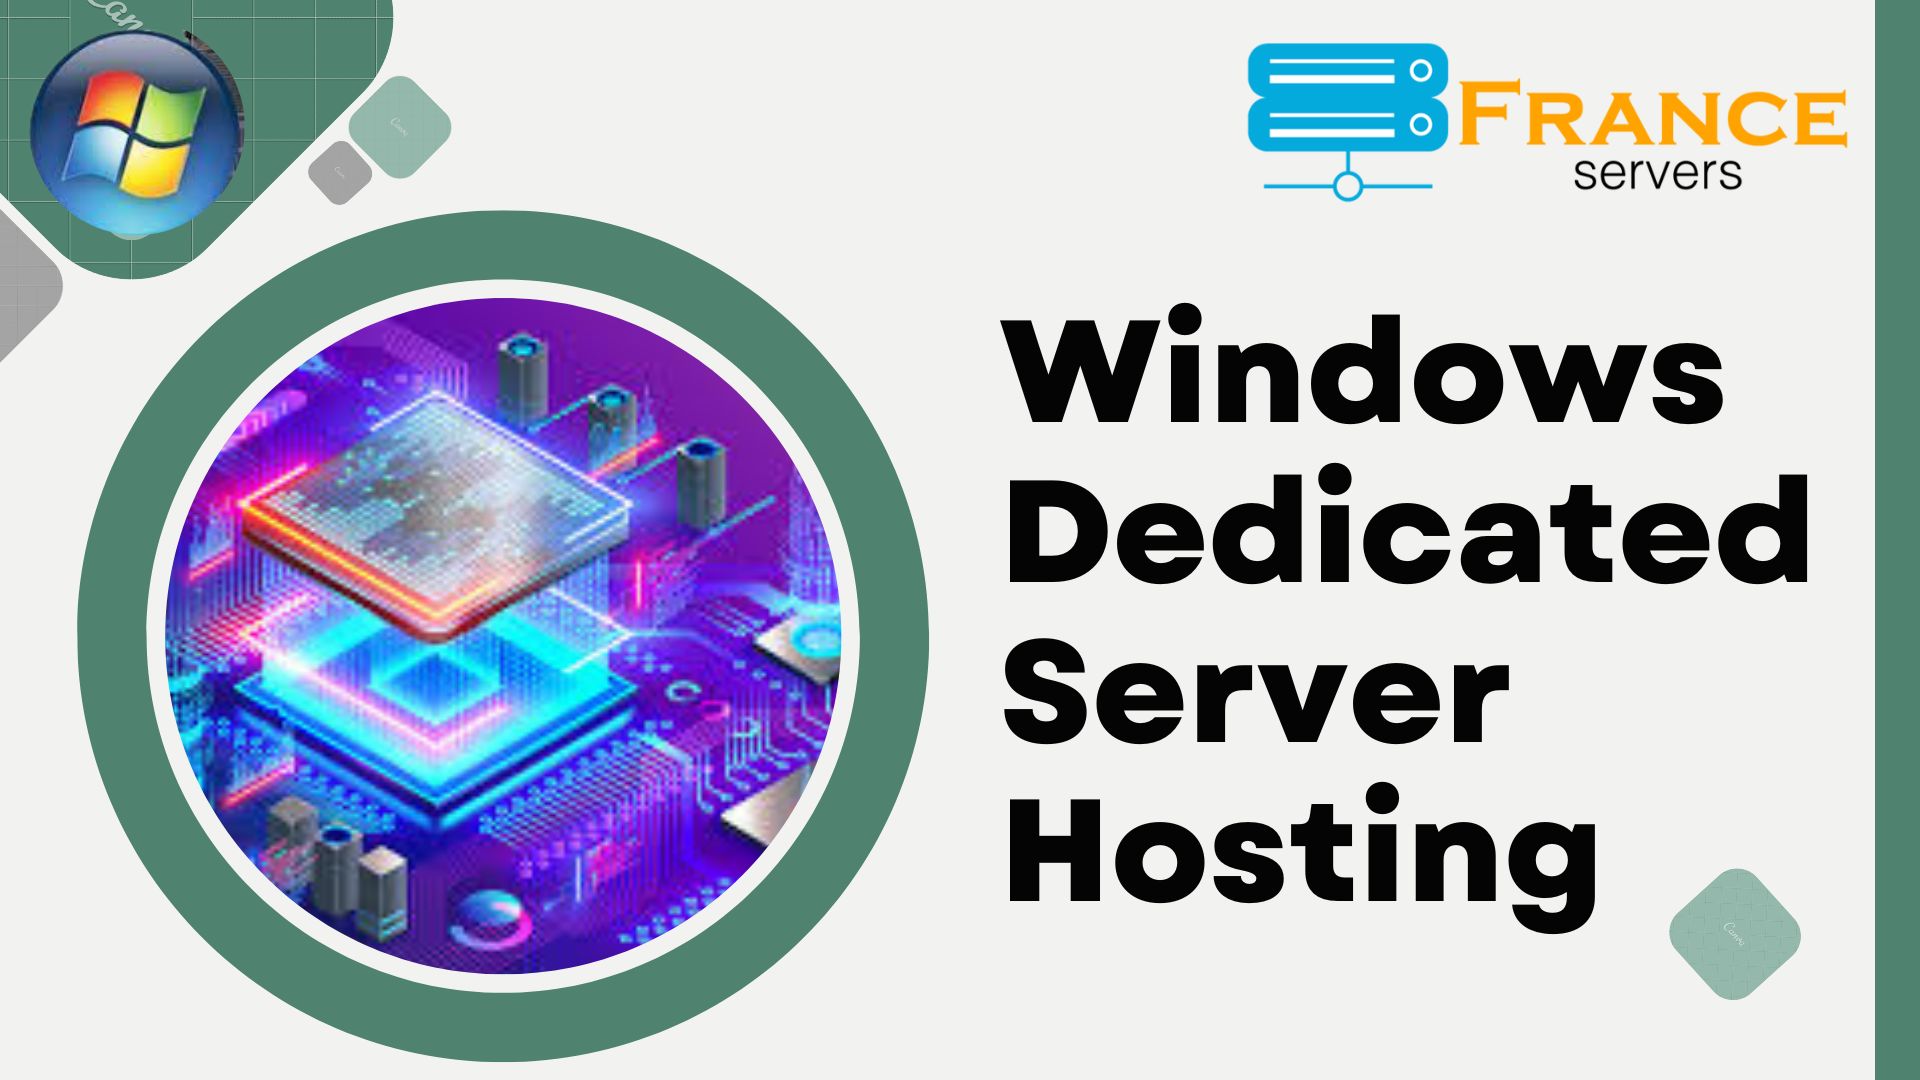 Windows Dedicated Server Hosting